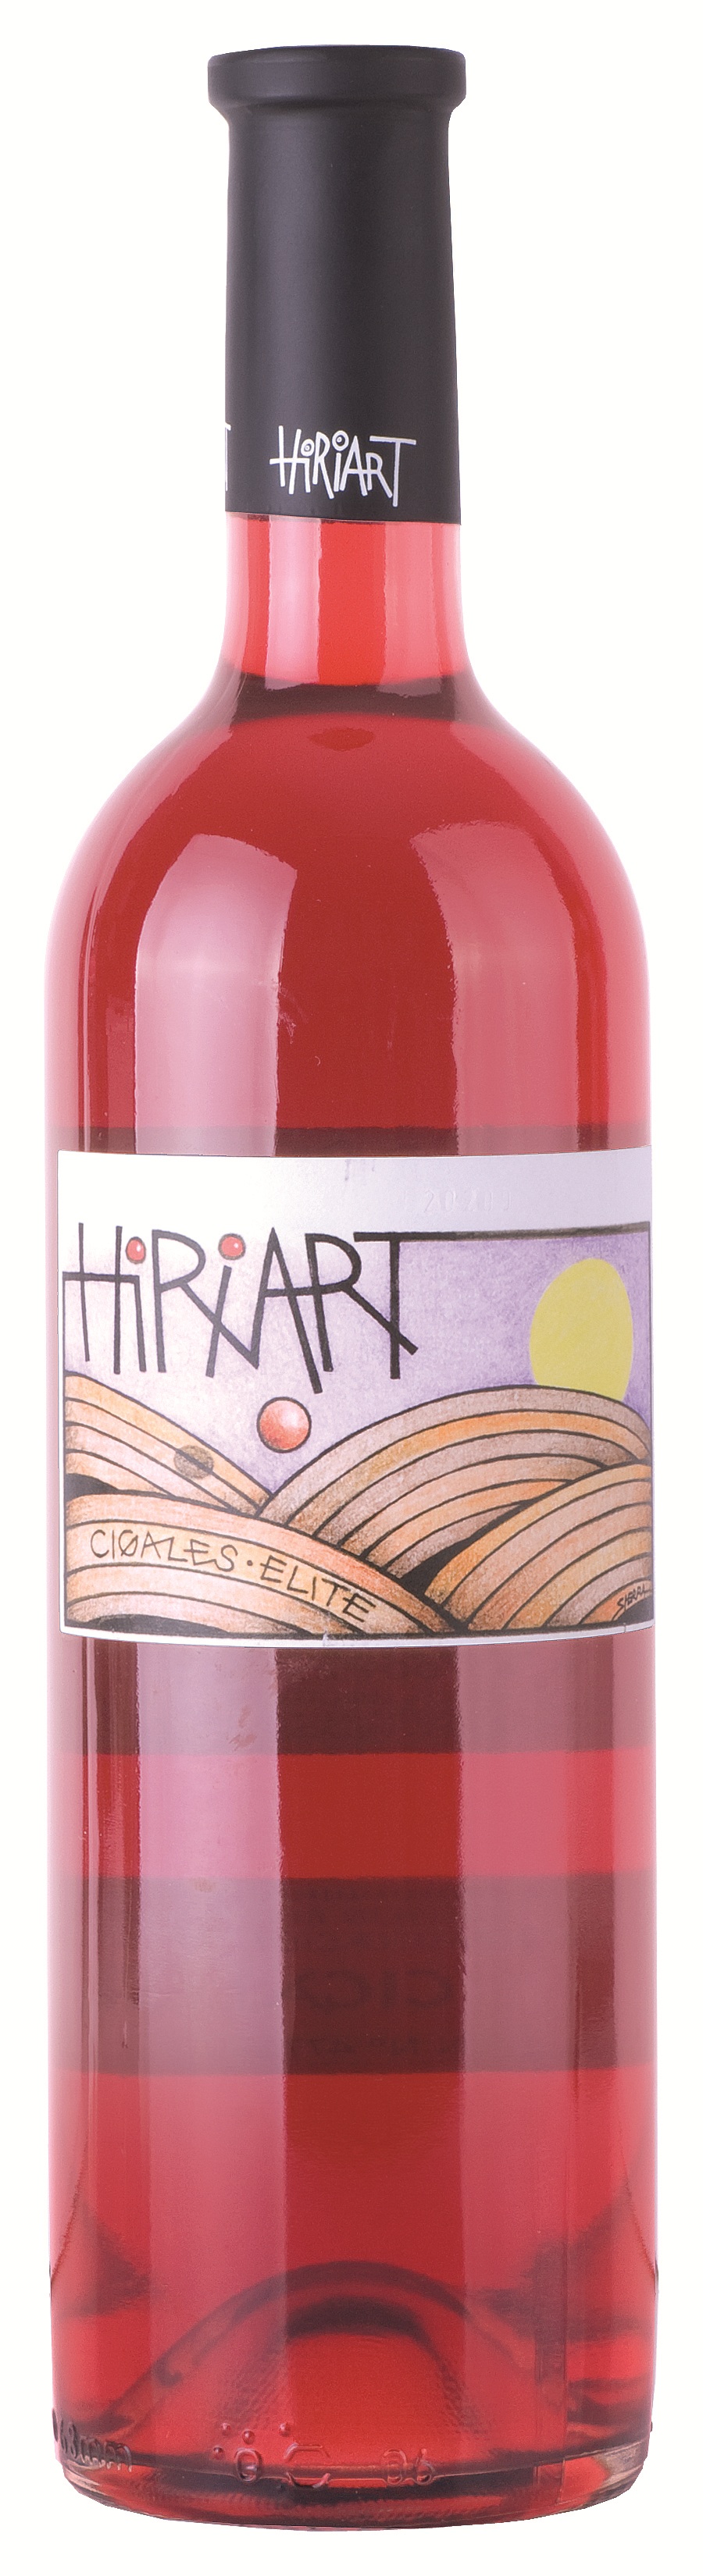 Logo Wine Hiriart Rosado Élite